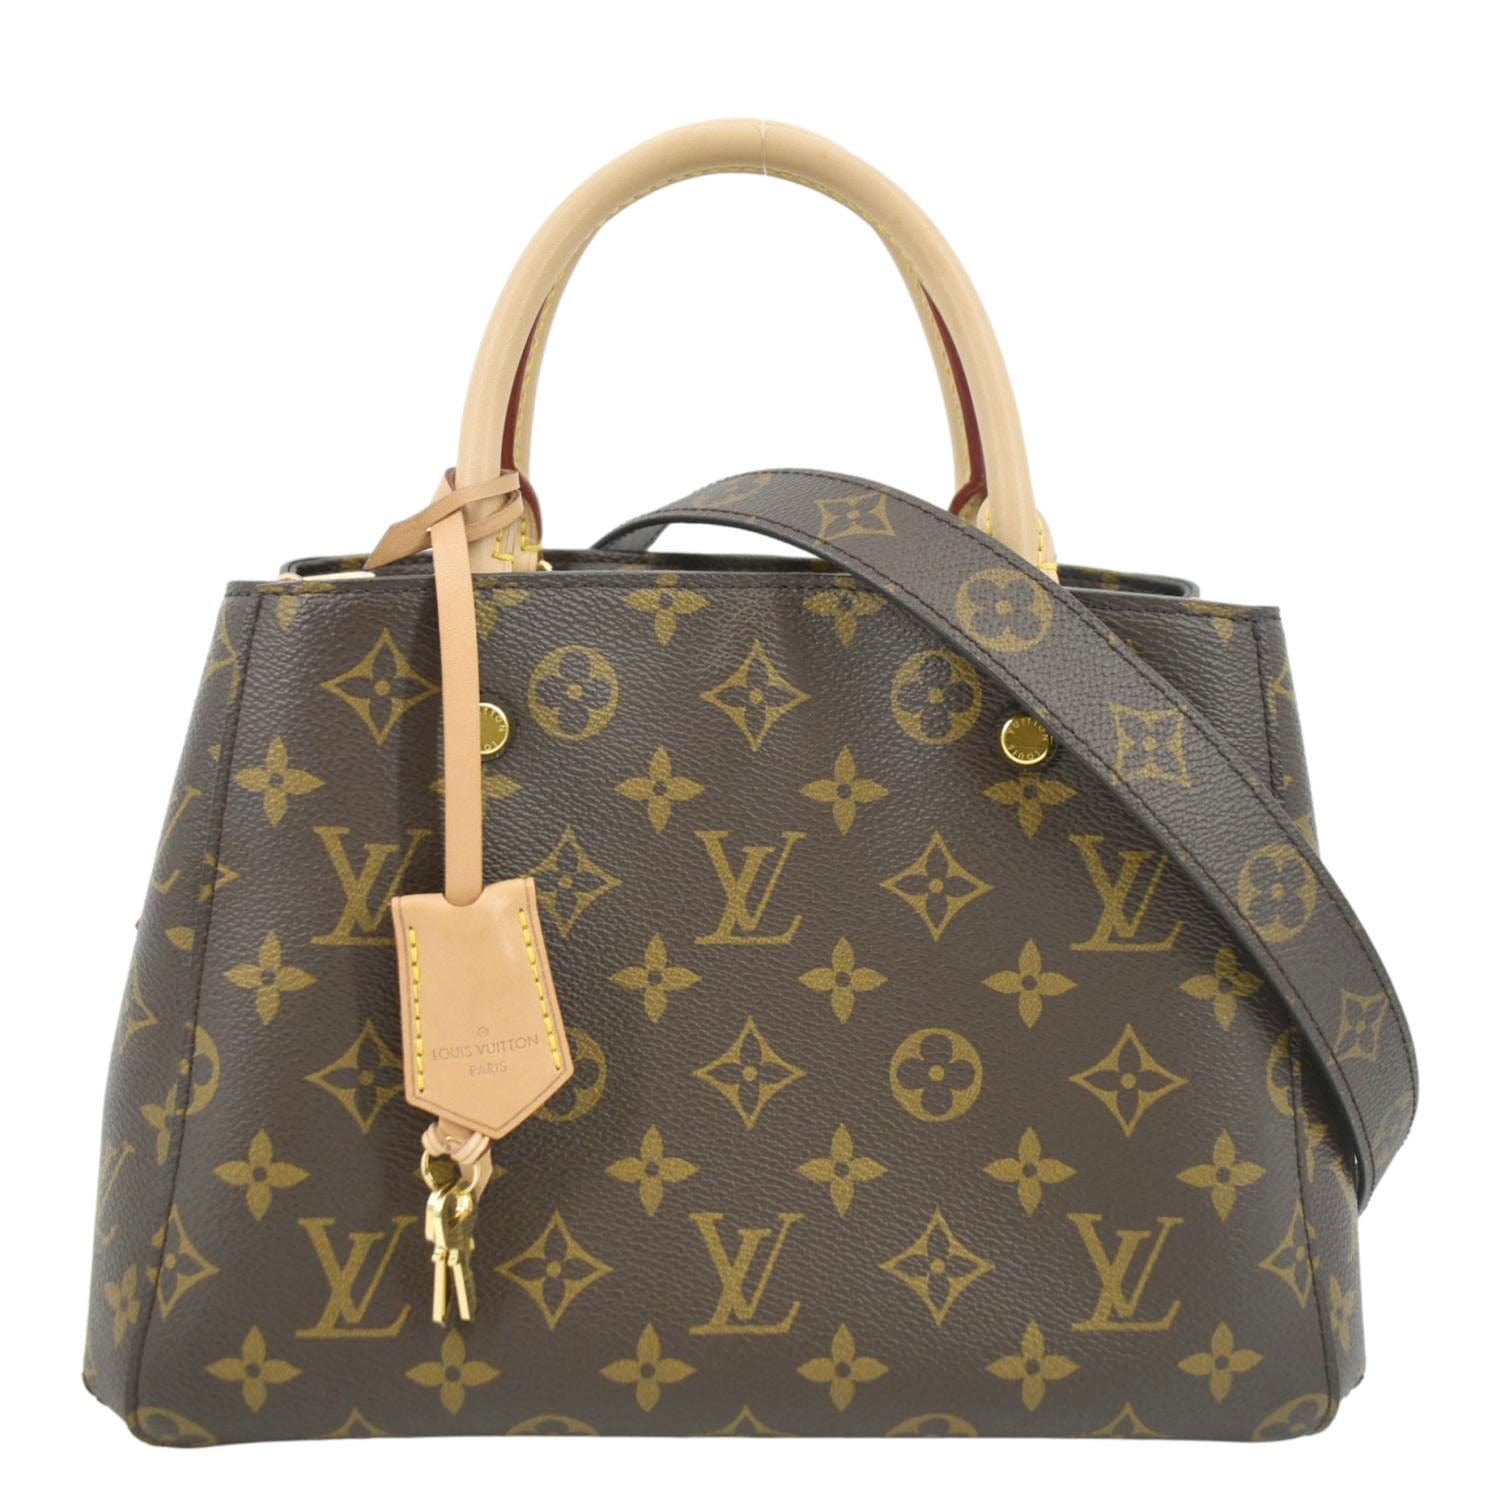 Designer Inspired Handbags. Luxury Replica Handbags: The Epitome